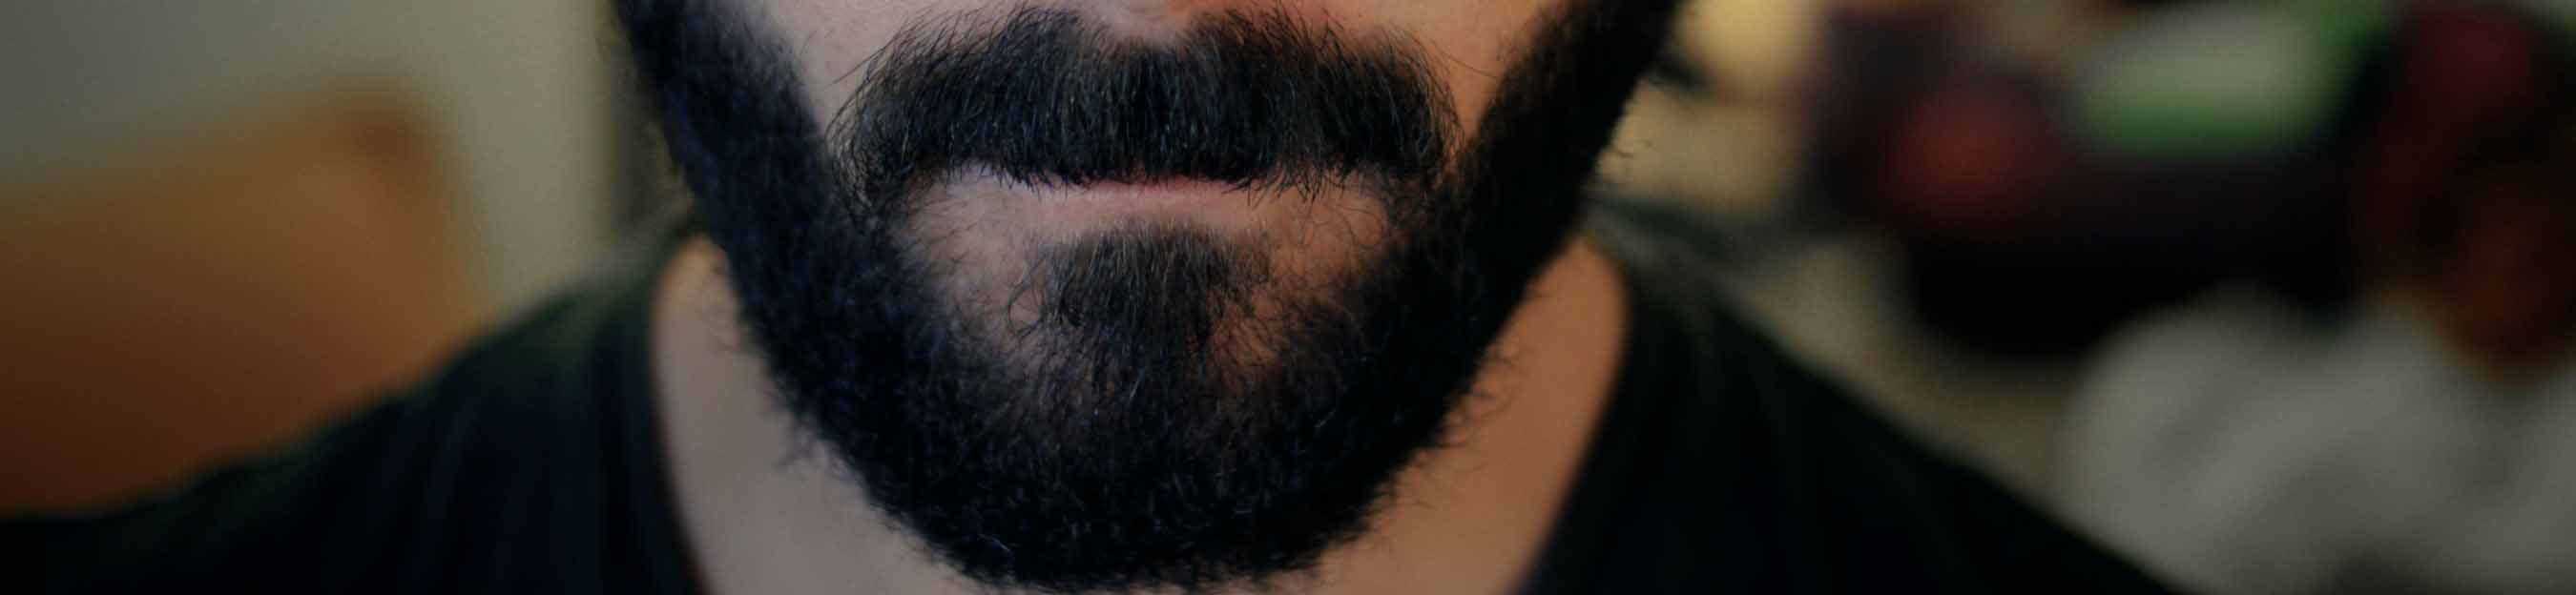 beard1